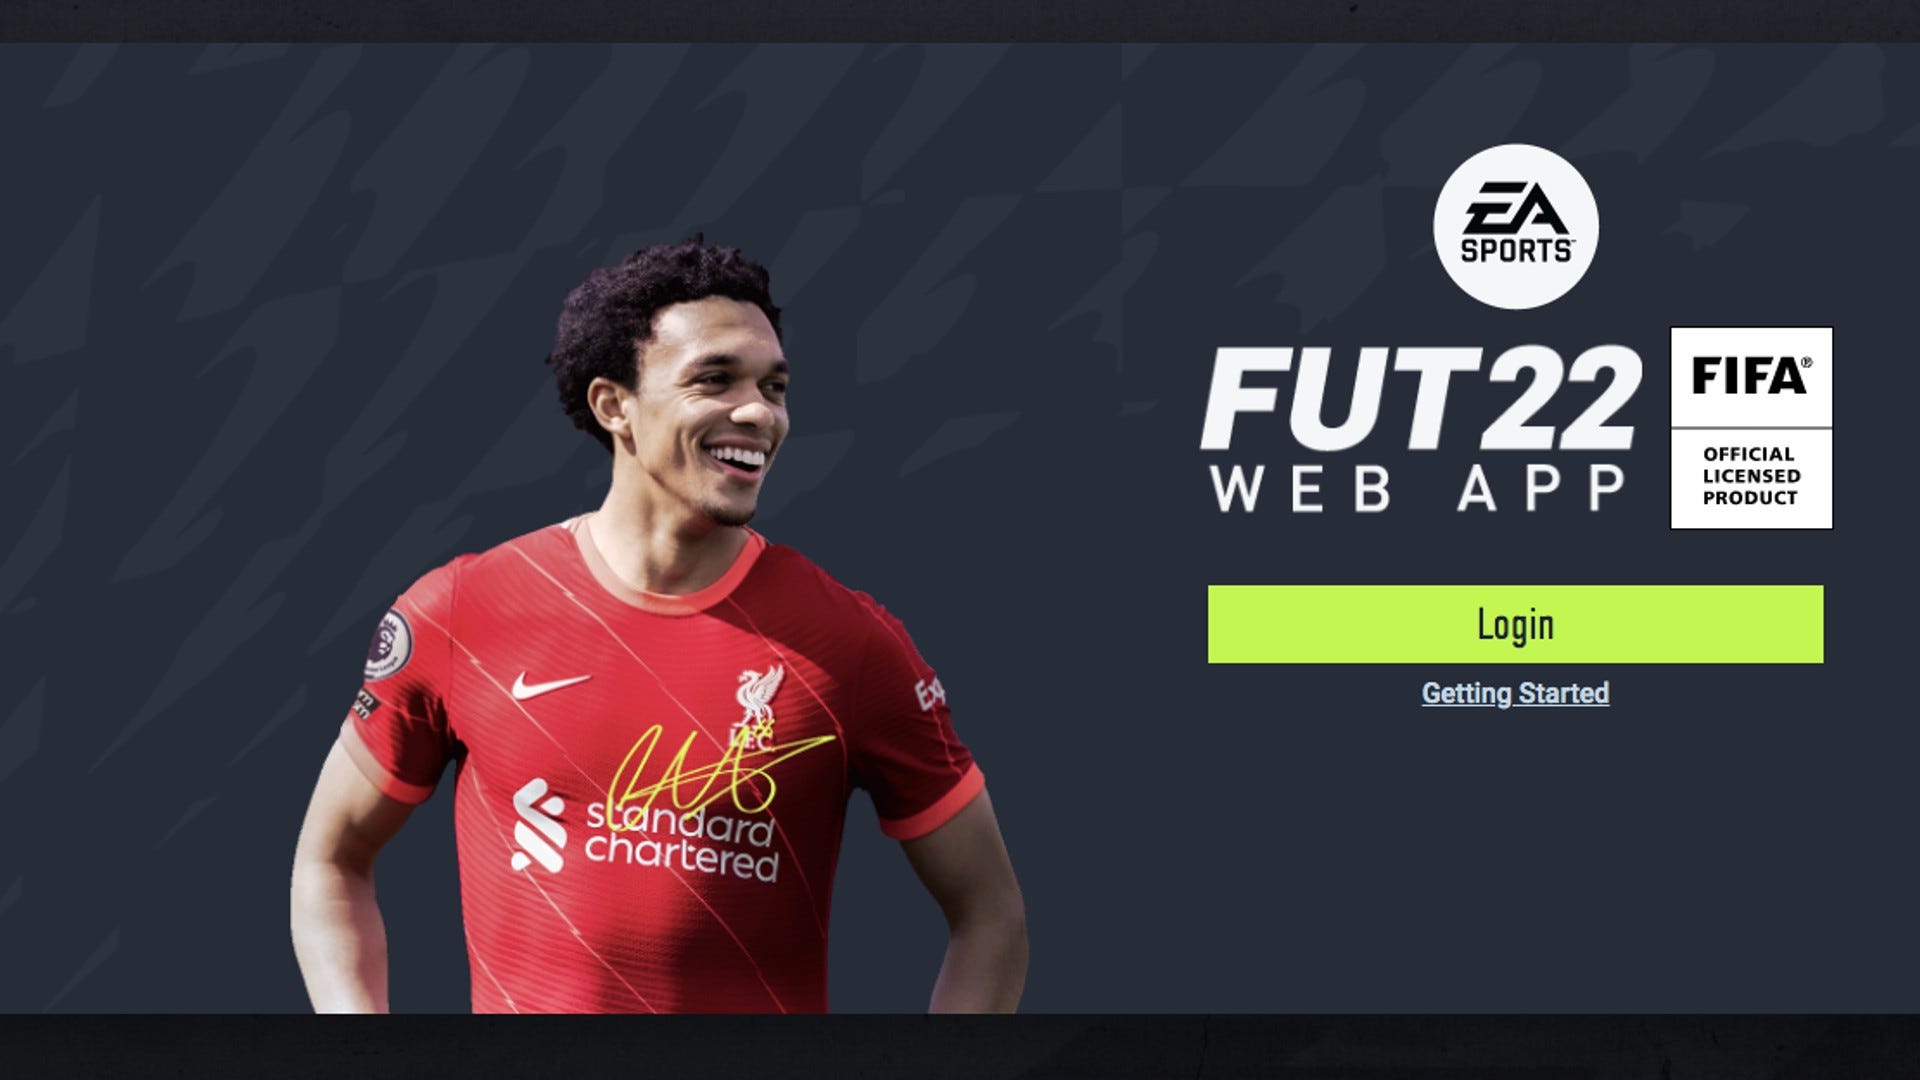 FUT FIFA 22 Web App screen